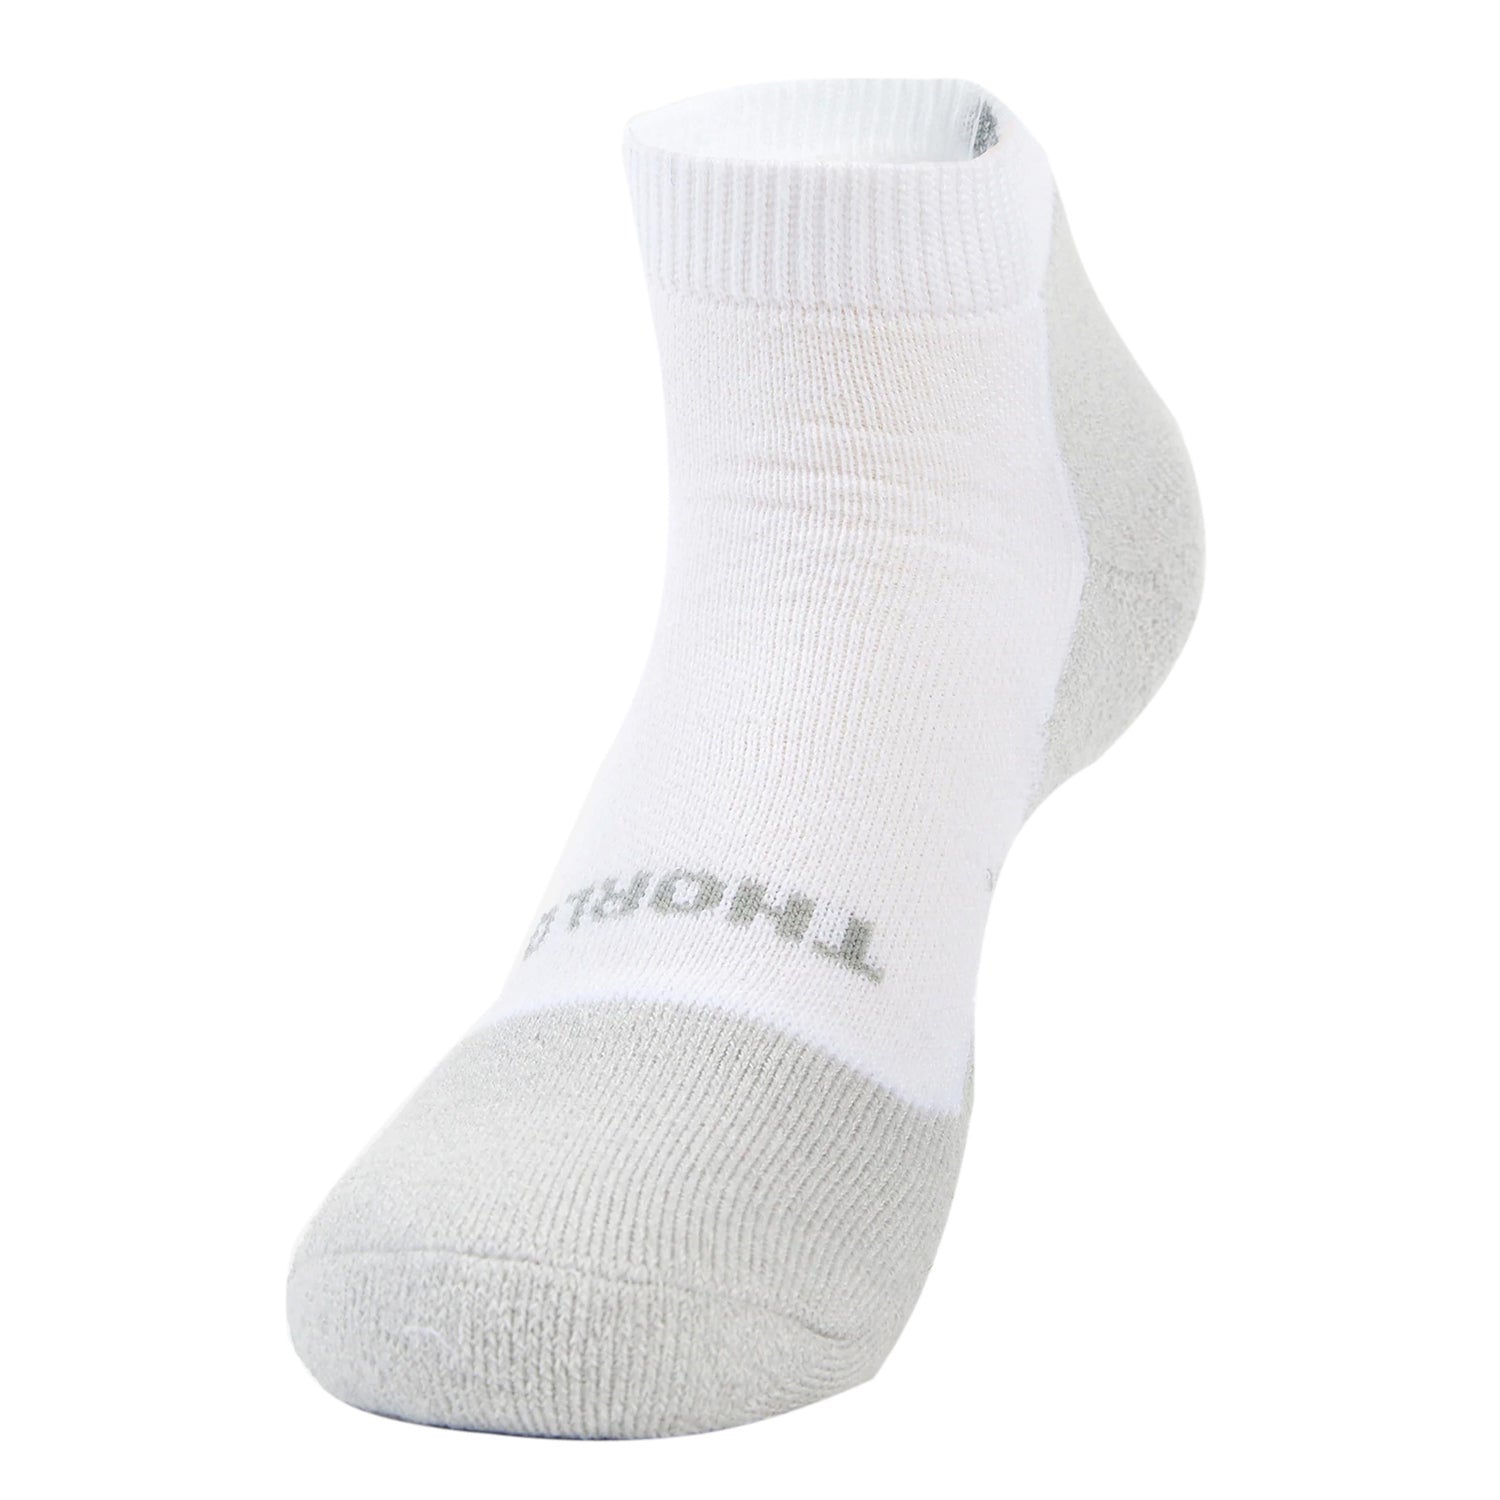 Peltz Shoes  Unisex Thorlo Socks Light Cushion Low-Cut Pickleball Socks - 1 Pair White P1CCU0-WHT